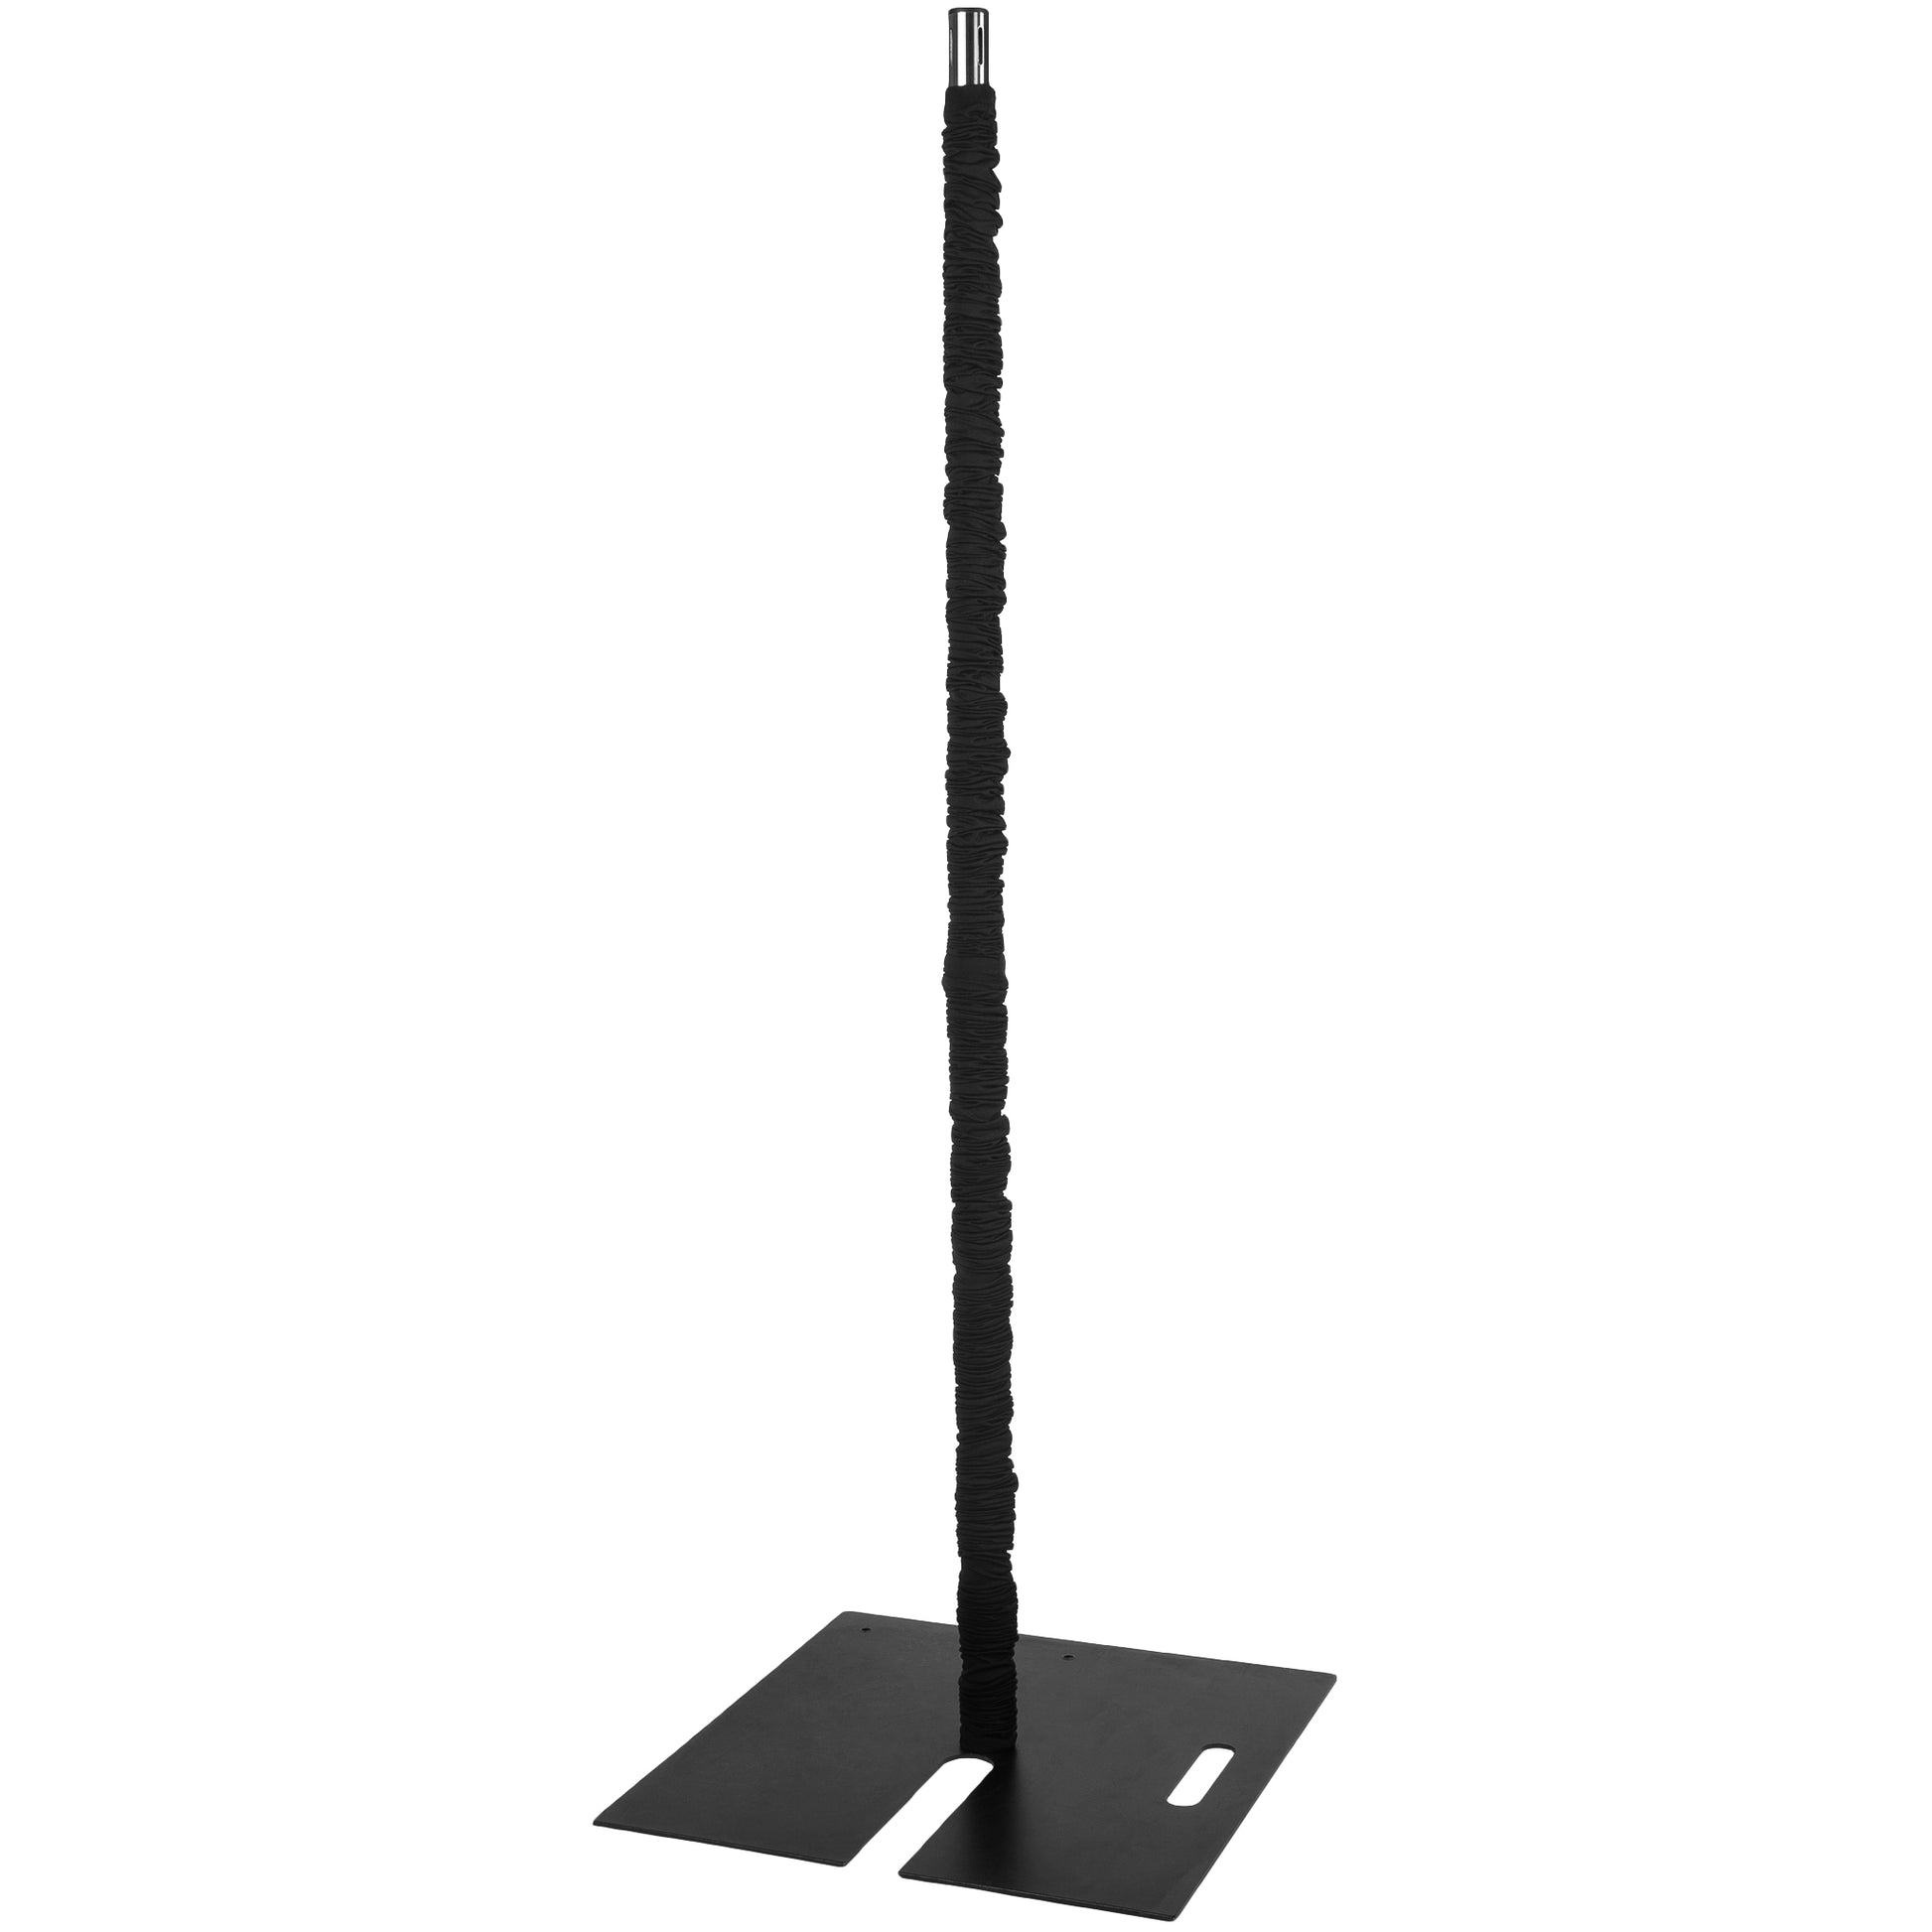 10ft Spandex Upright Pole Cover - Black - CV Linens